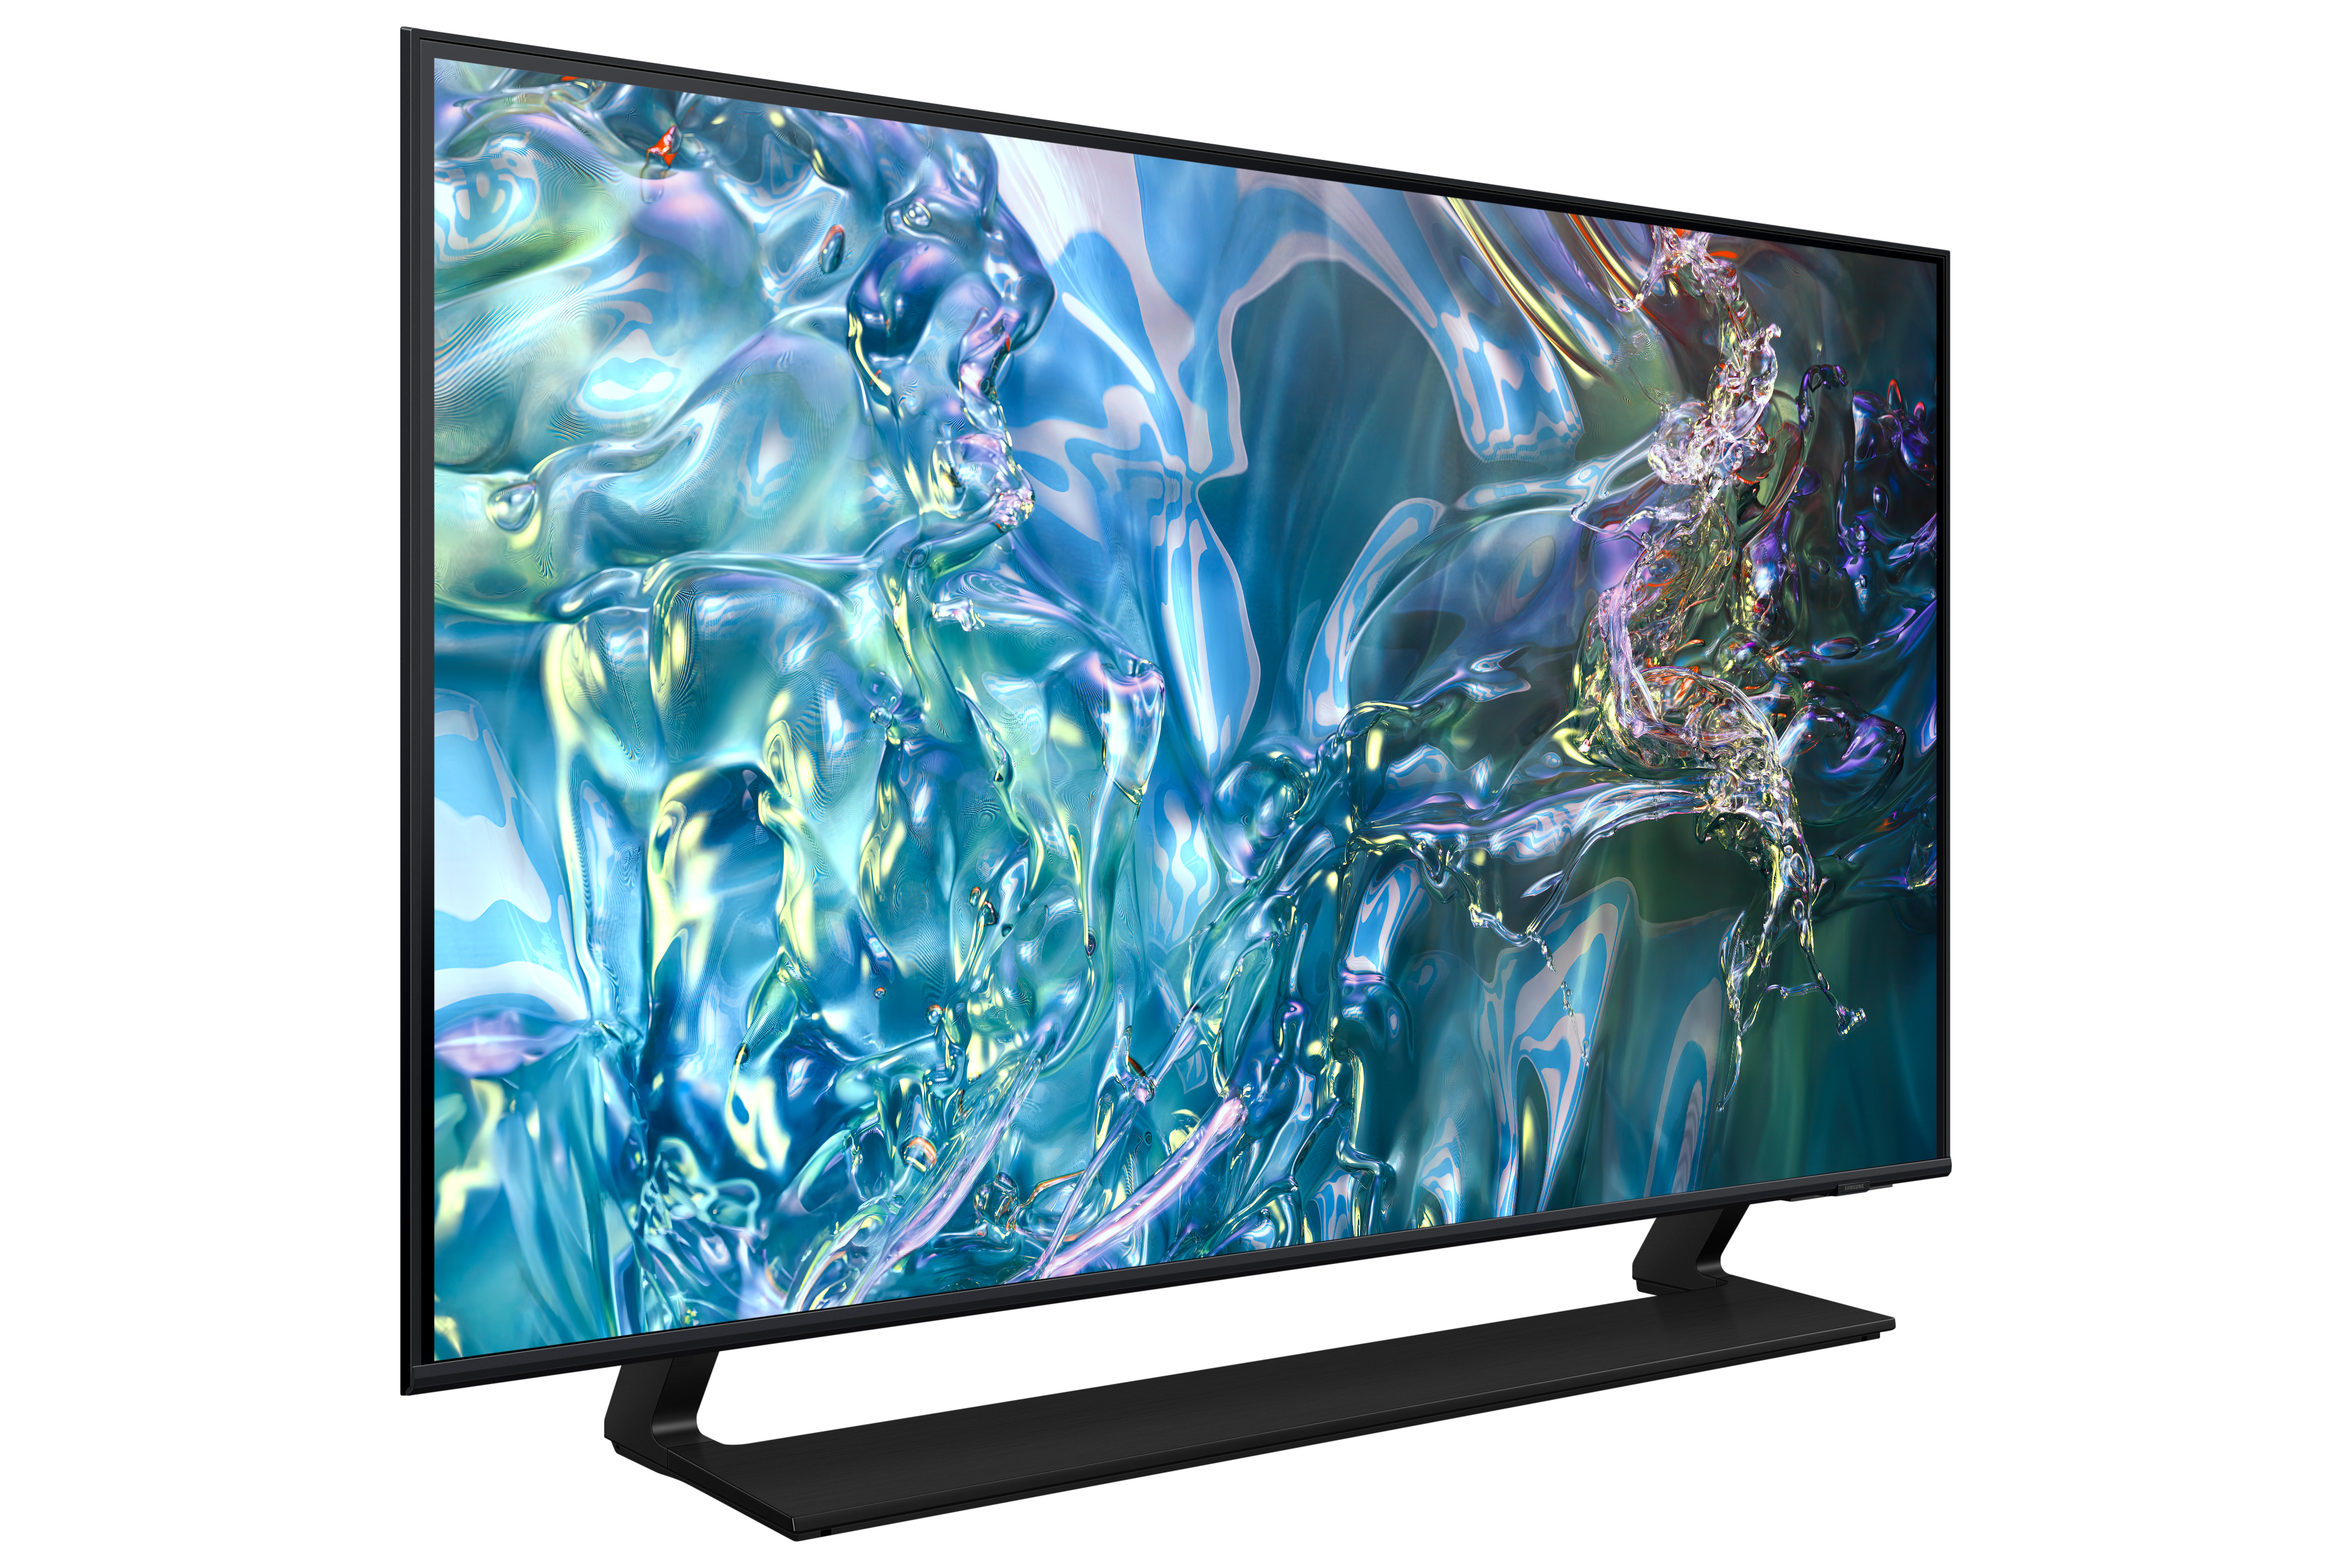 QLED Tivi 4K Samsung 43Q60D 43 inch Smart TV